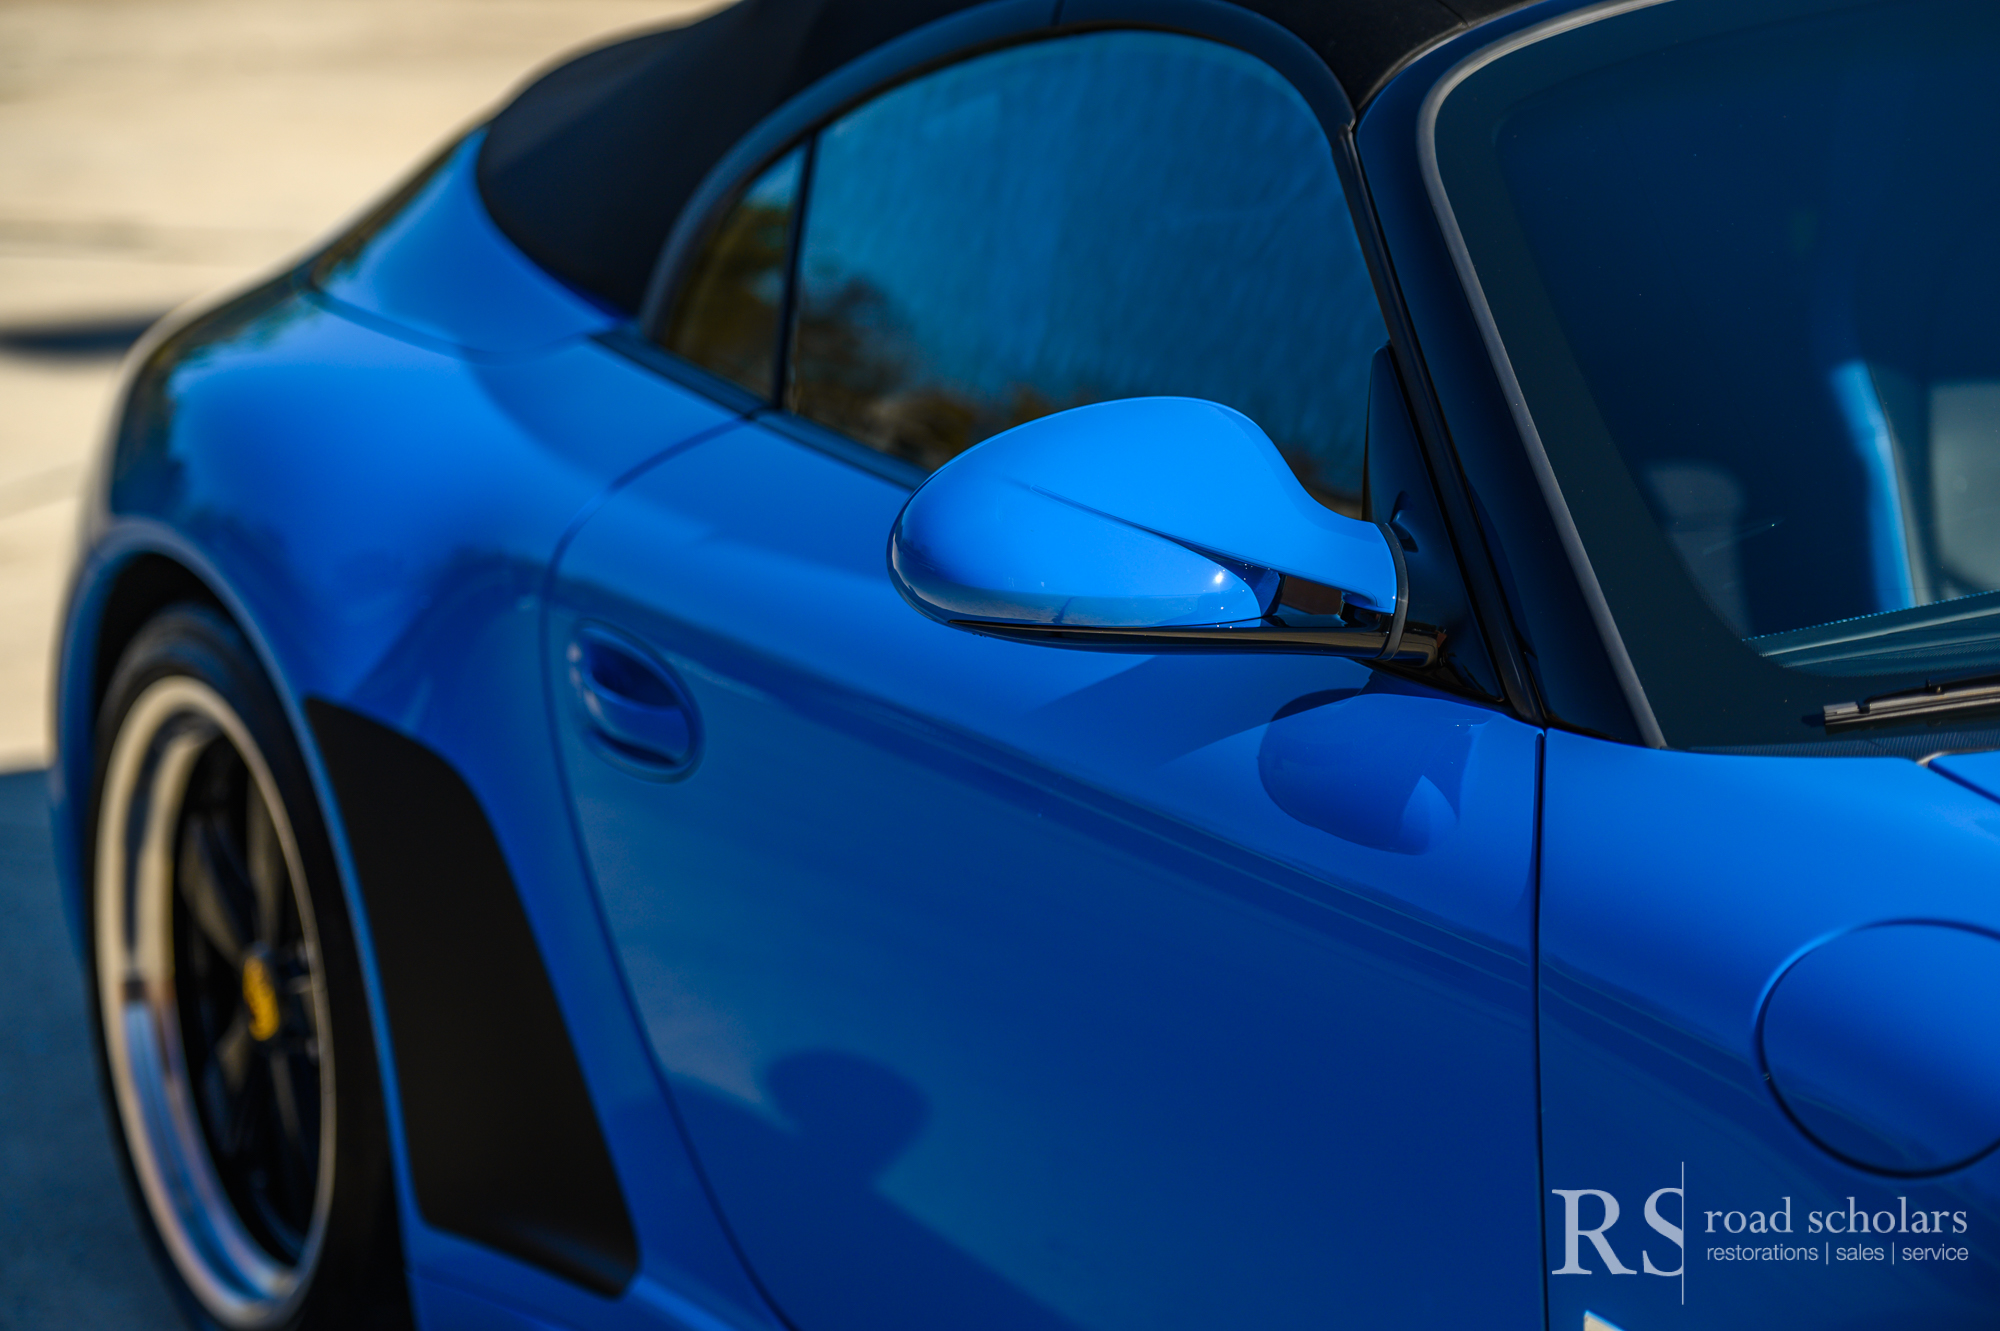 2011 Porsche 911 Speedster - For Sale by Road Scholars